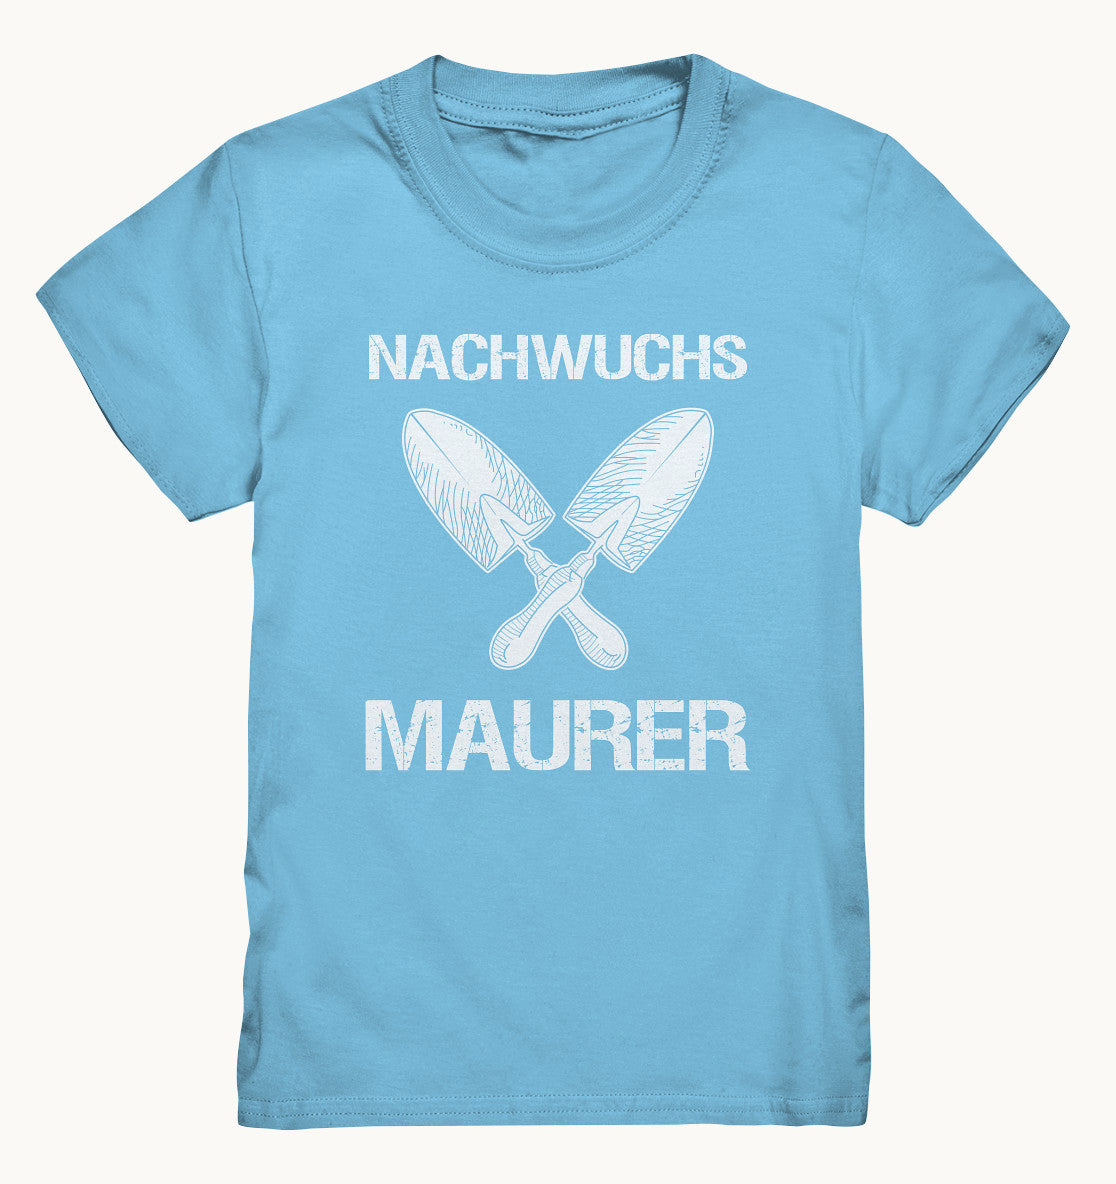 Nachwuchs Maurer - Kids Premium Shirt